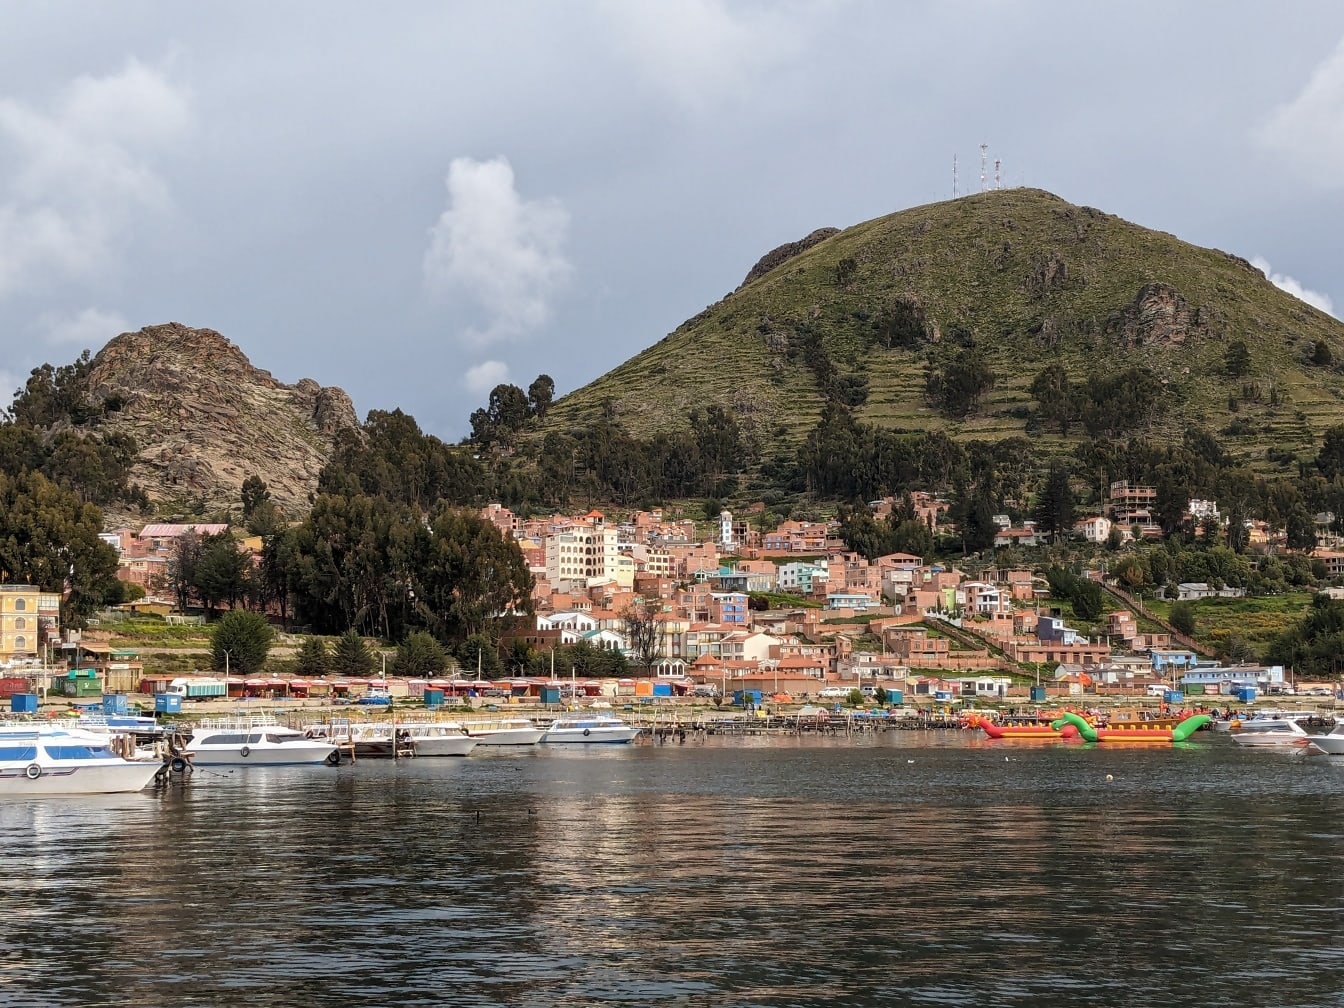 Panorama of touristic Copacabana city on lake Titicaca in Bolivia